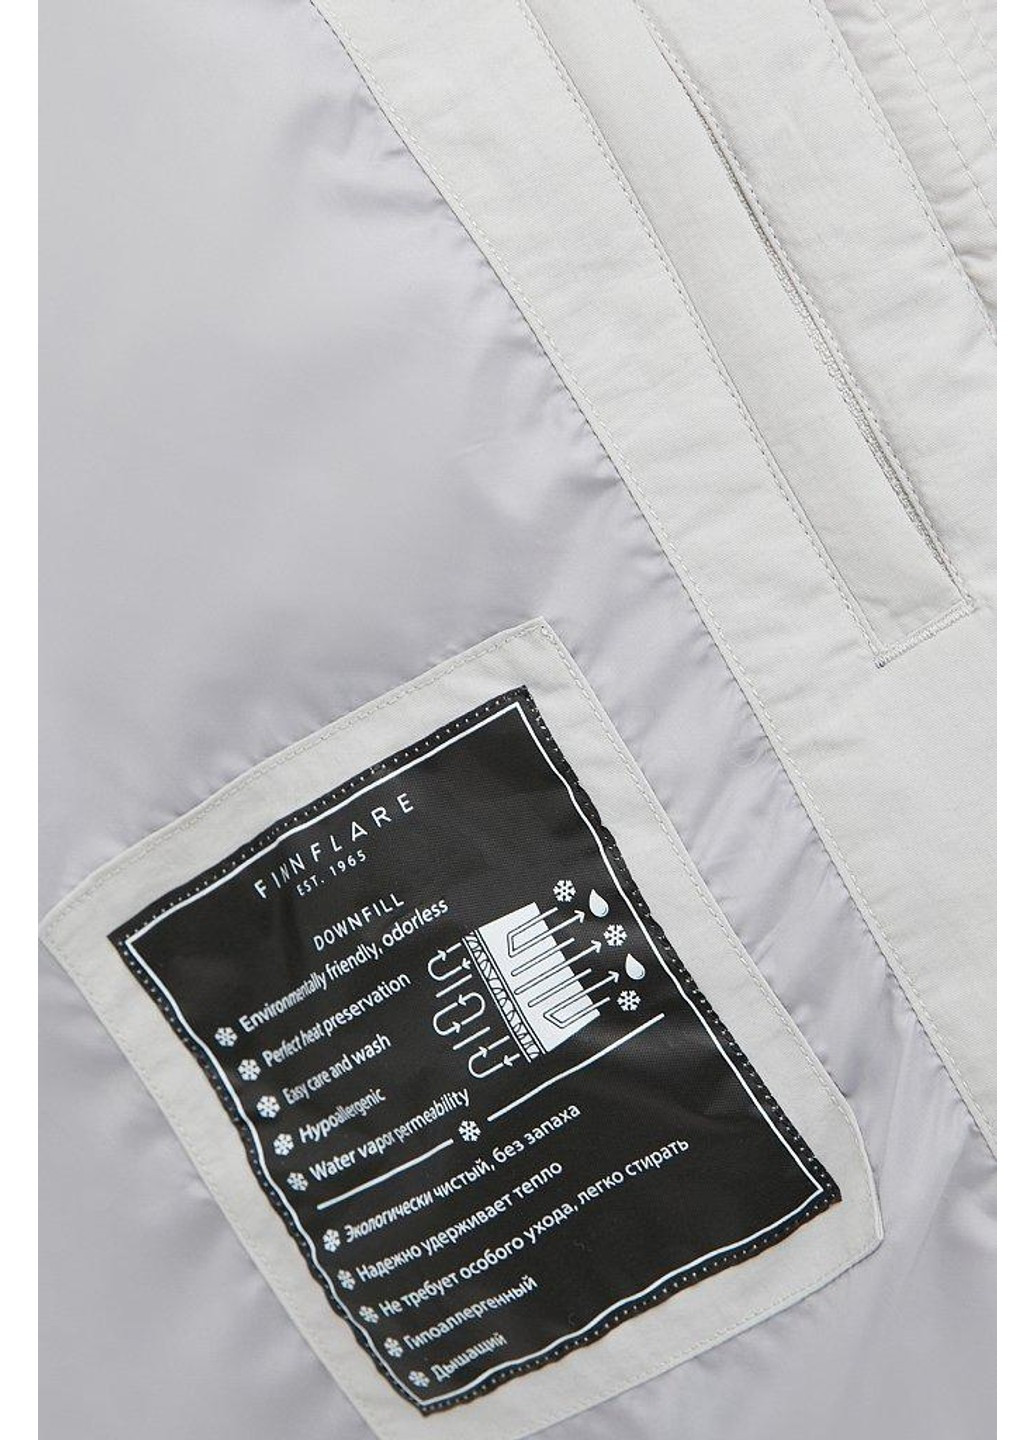 Сіра зимня куртка fab11065-211 Finn Flare